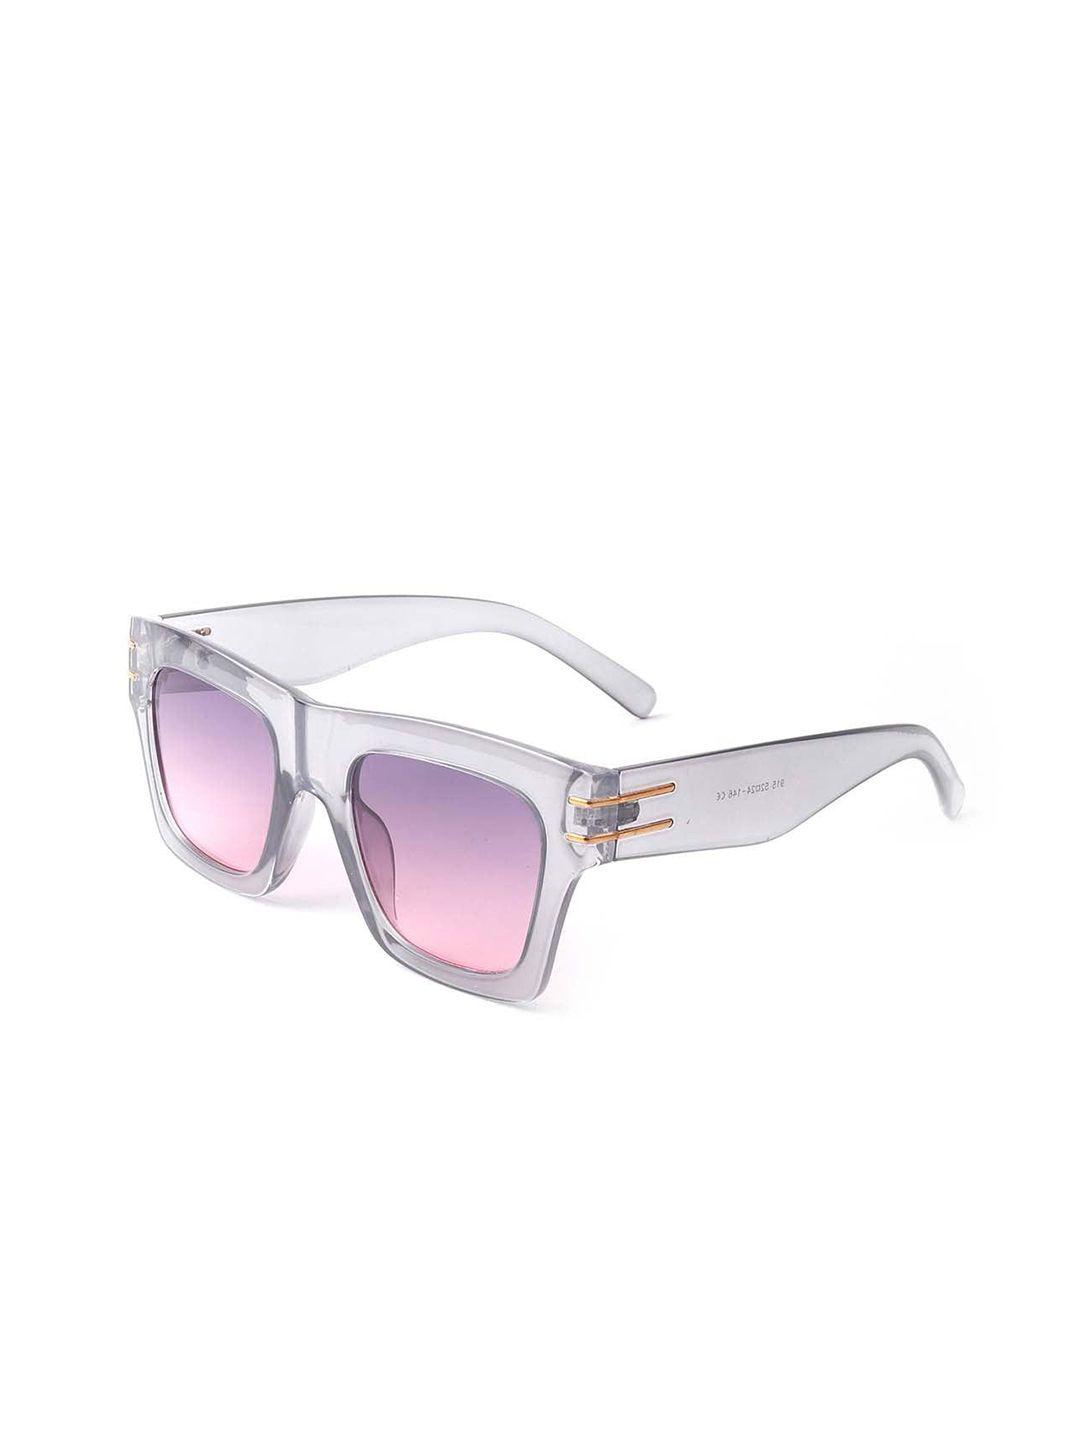 odette-women-lens-&-oversized-sunglasses-with-uv-protected-lens-new593